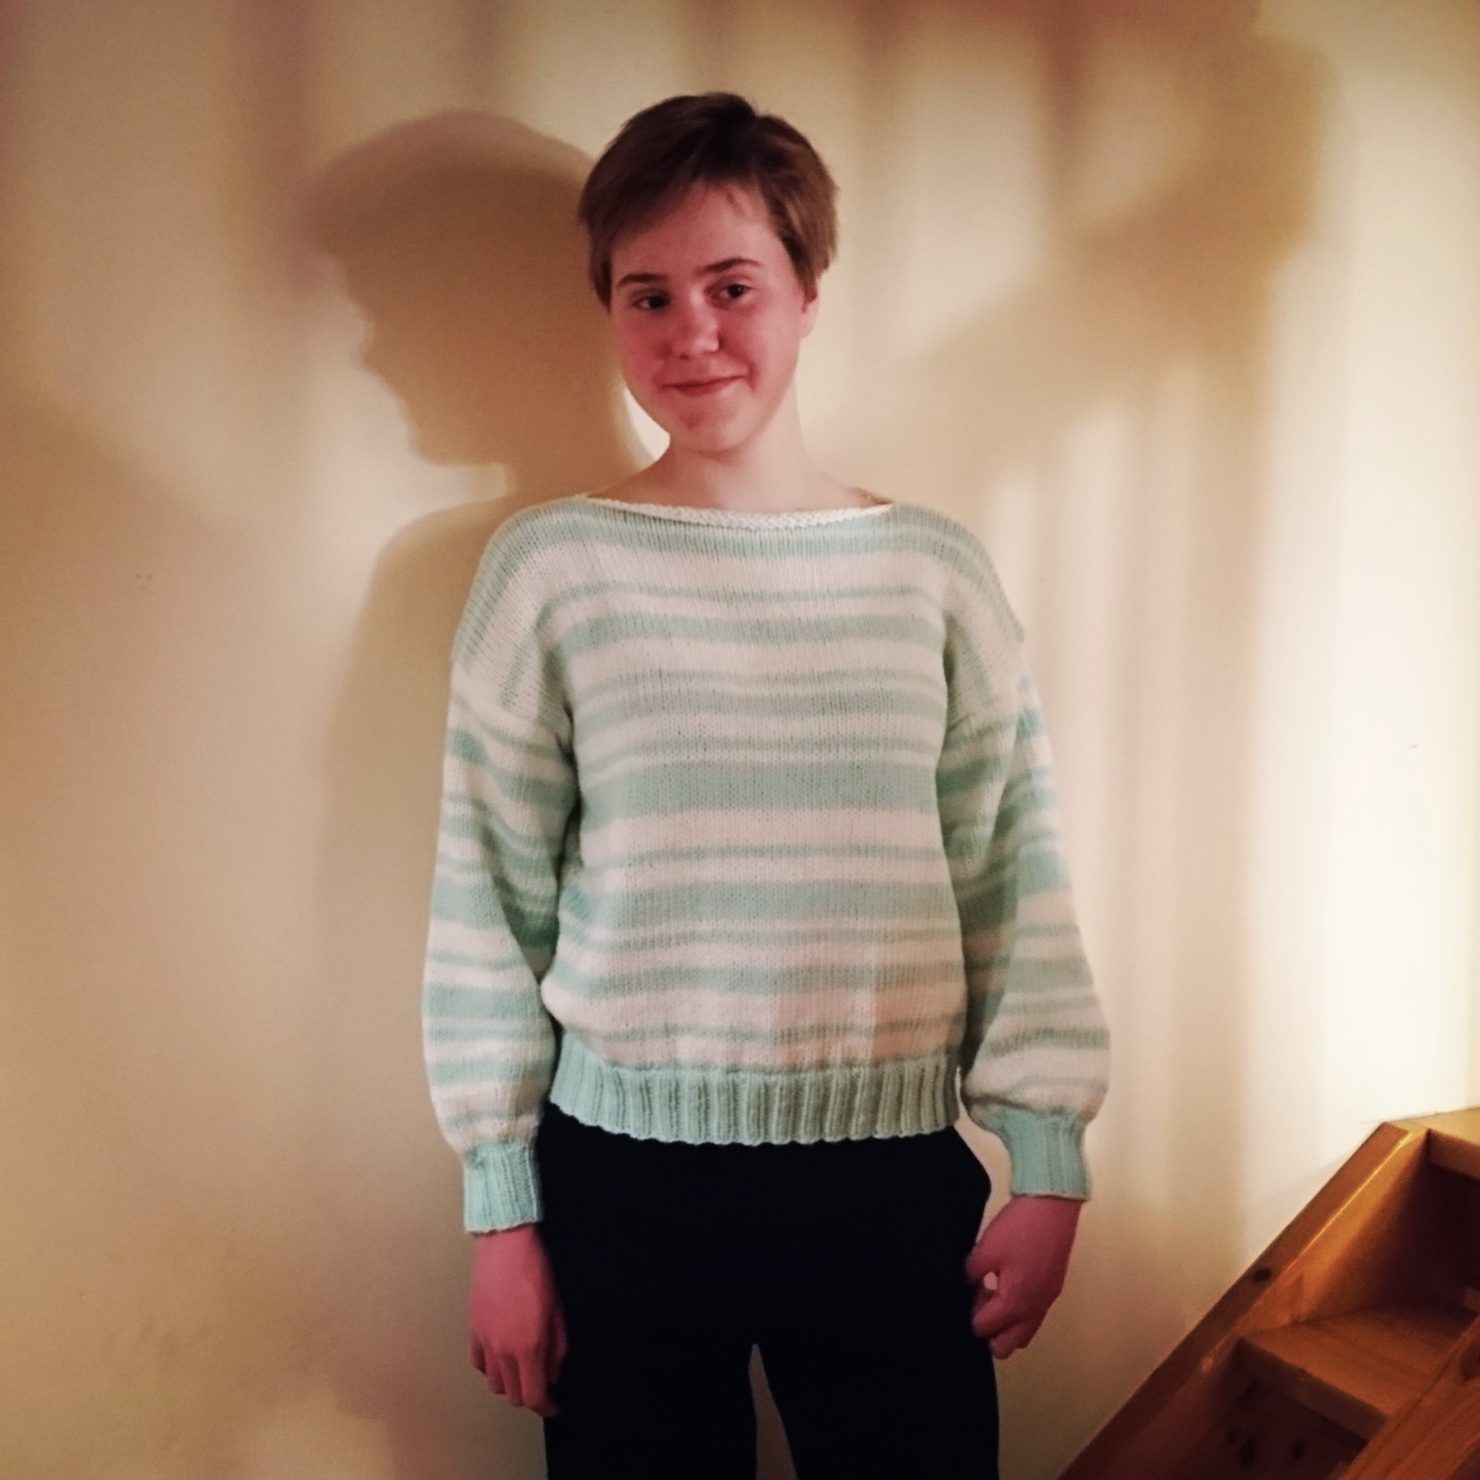 Ingeborgs genser